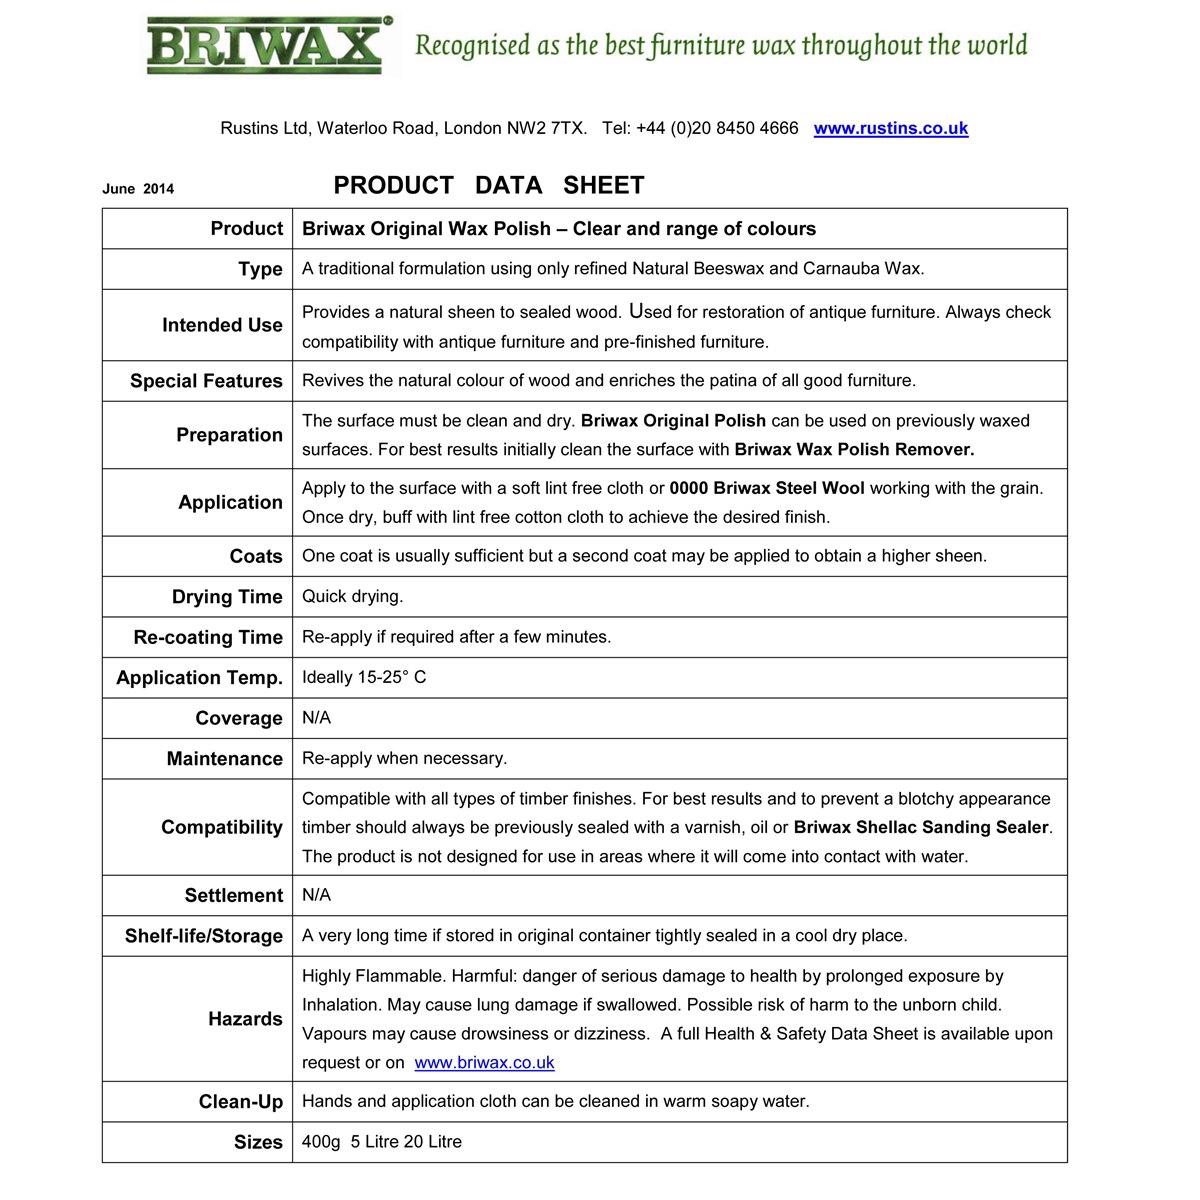 Briwax Original Wax usage instructions